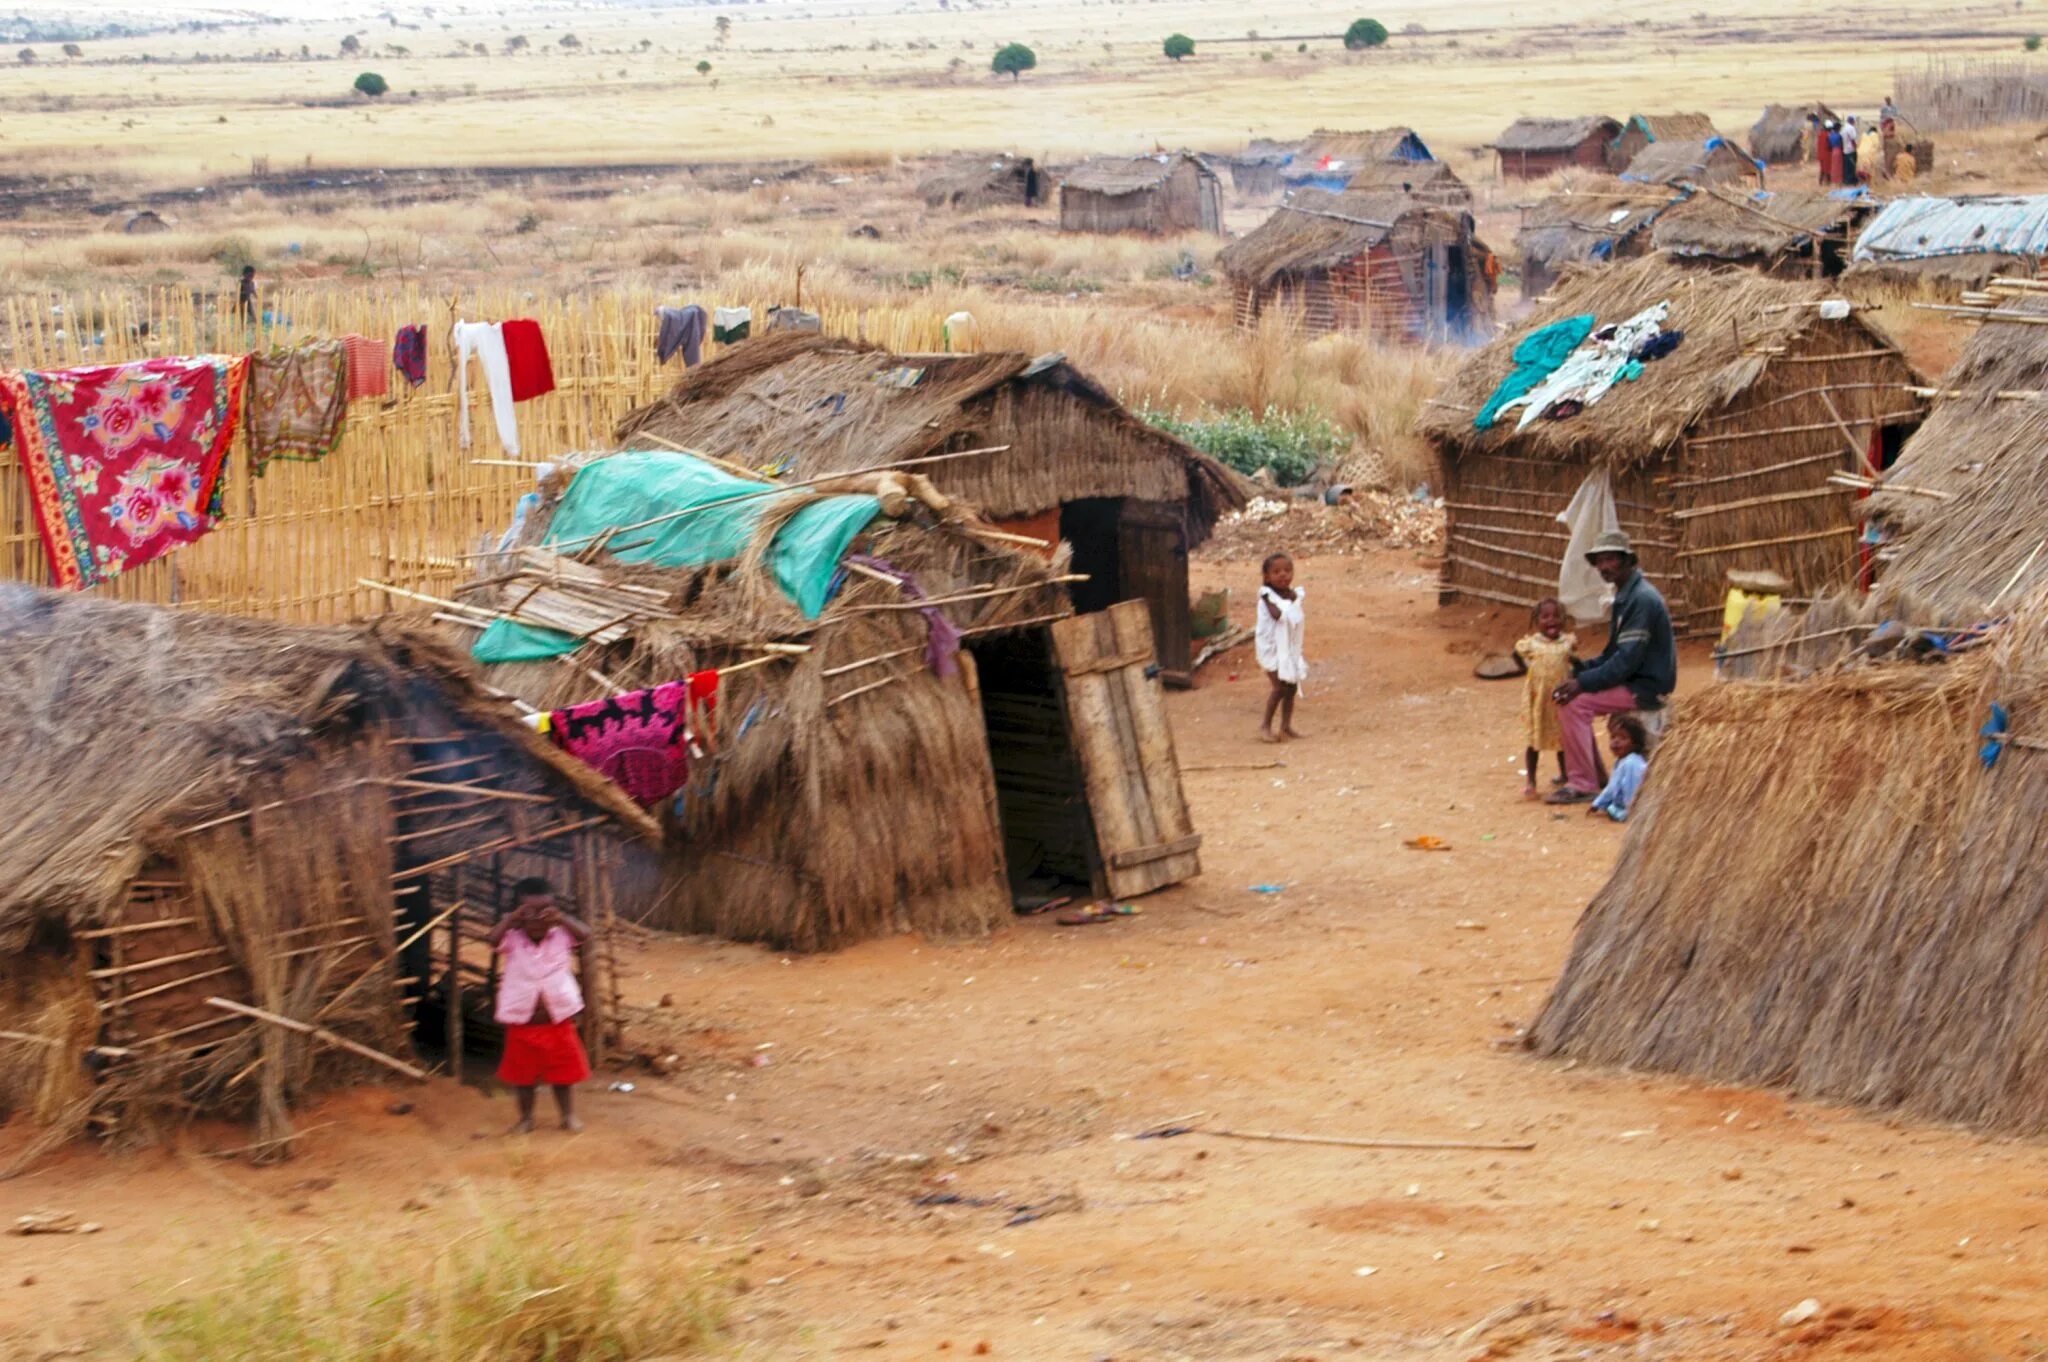 People in the village had been. Мадагаскар бедность. Мадагаскар Страна бедность. Мадагаскар трущобы. Мадагаскар нищета.